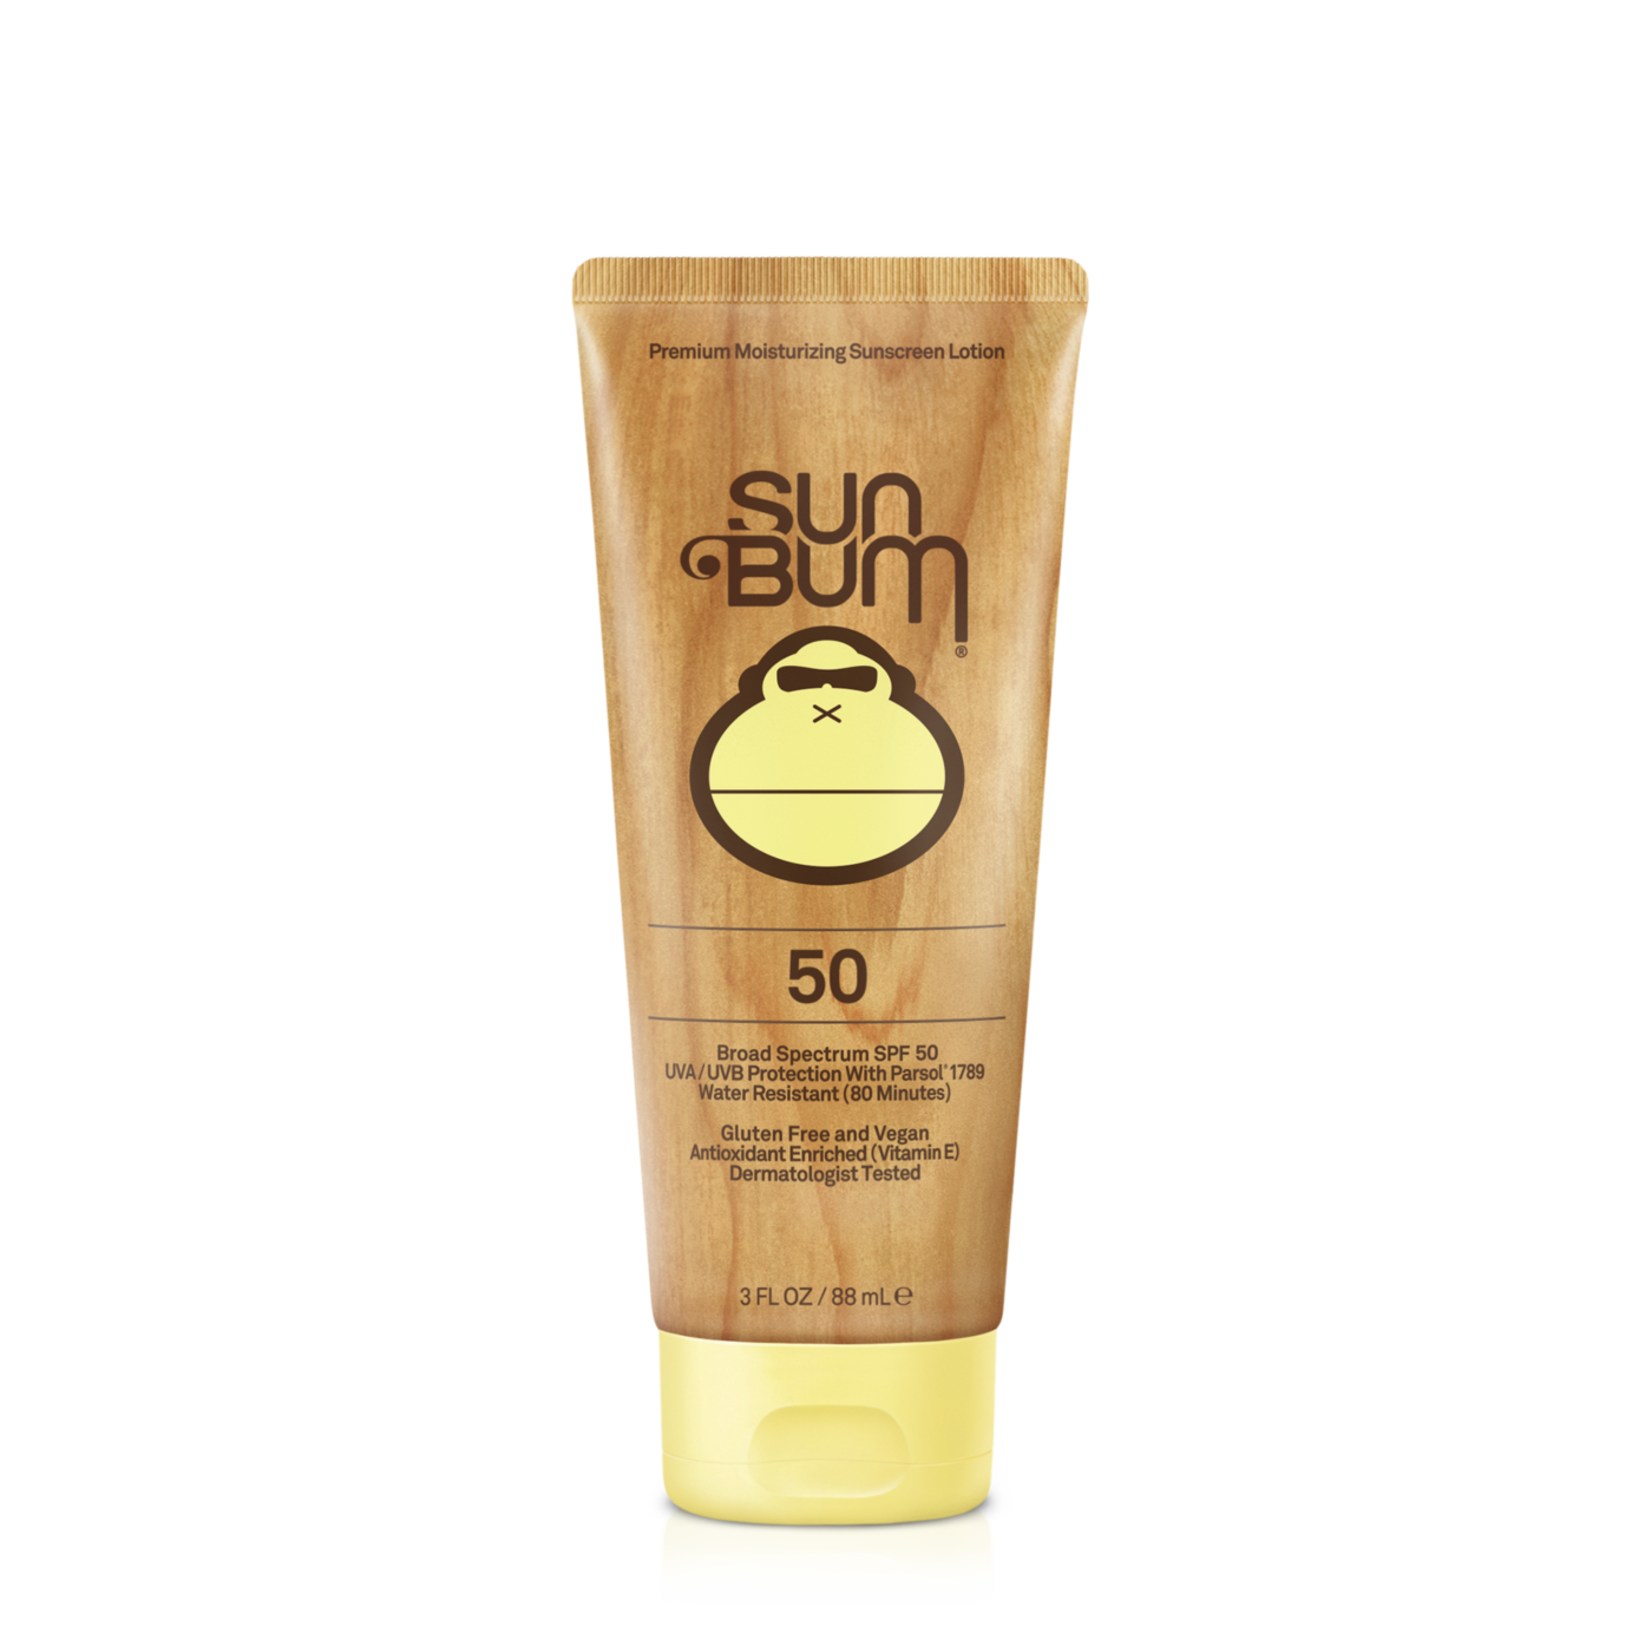 SUN BUM Original Sunscreen Lotion SPF 50